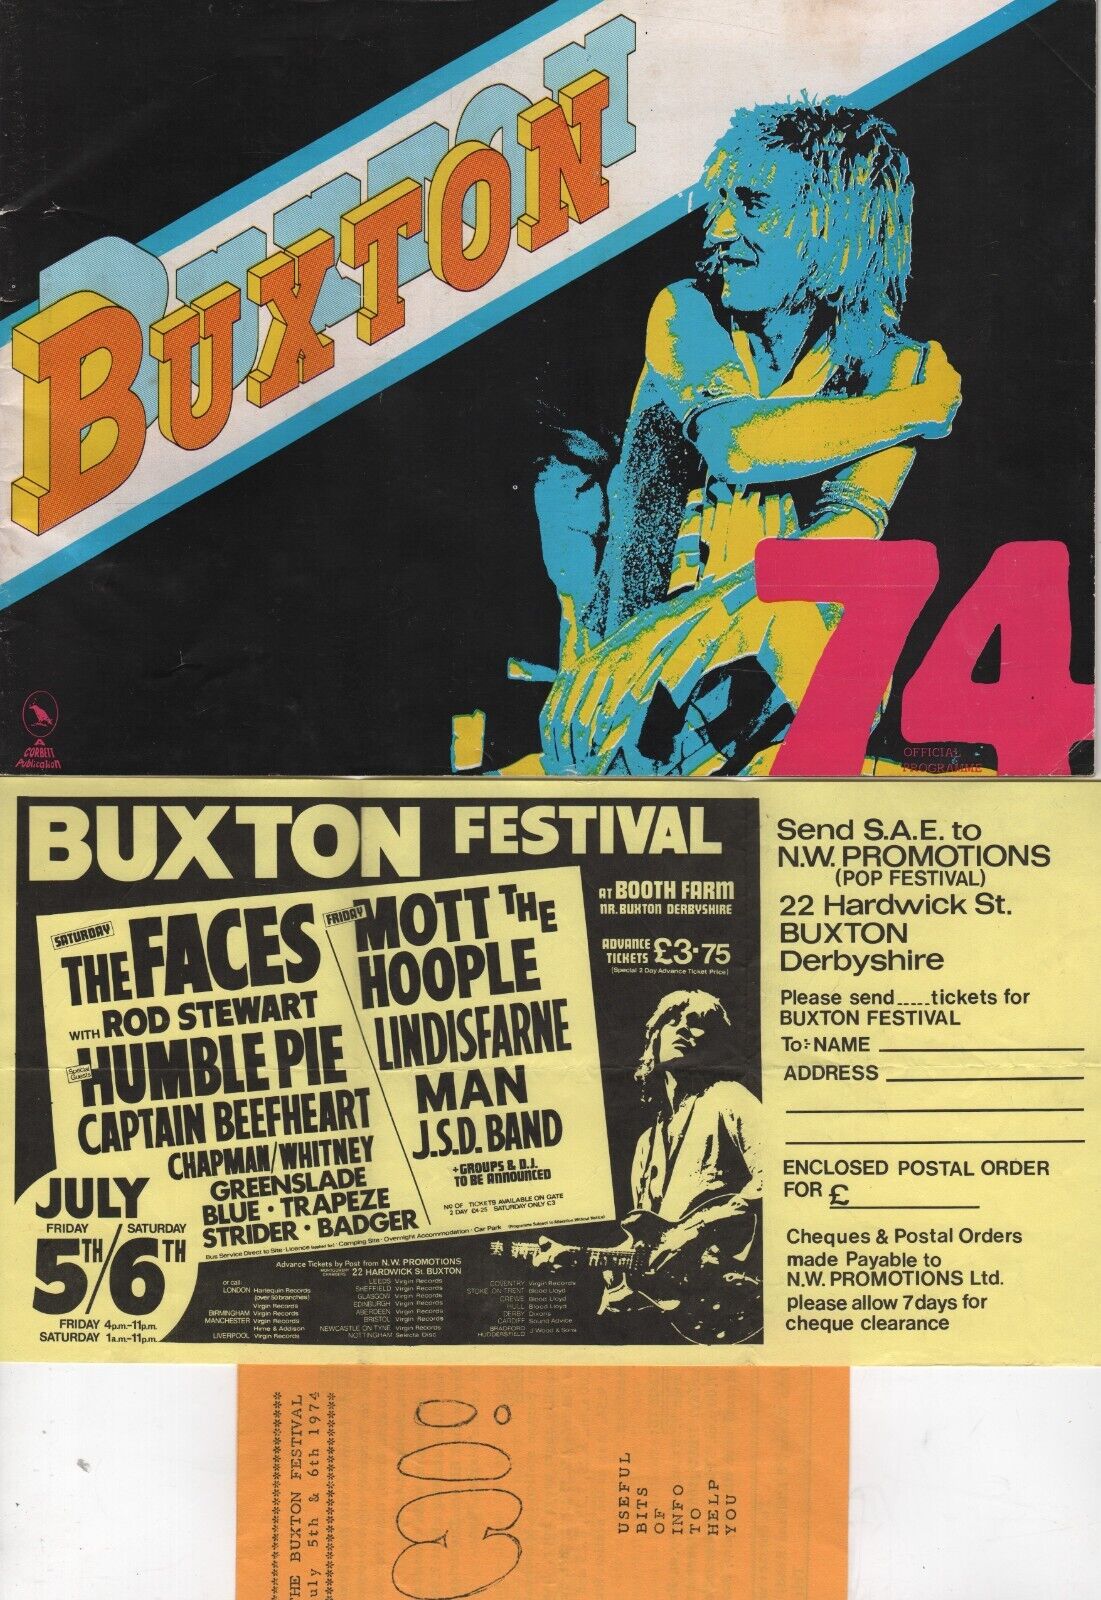 Buxton Festival Booth Farm Original Concert Programme & Flyer 1974 Vintage Rock